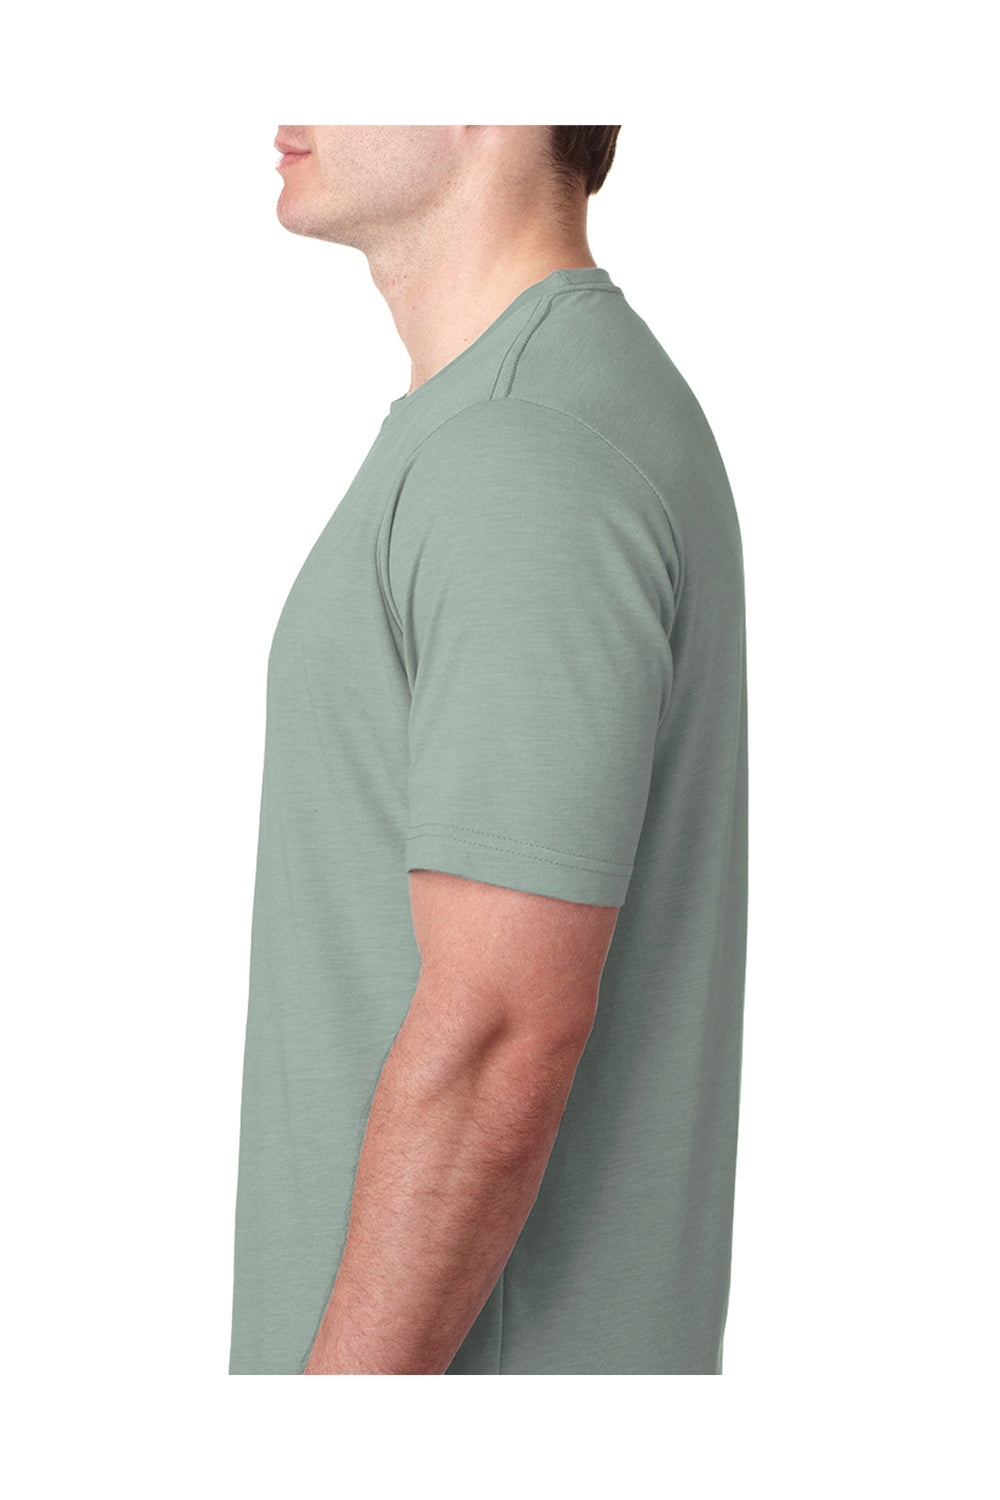 Next Level 6200 Mens Jersey Short Sleeve Crewneck T-Shirt Stonewashed Green Side